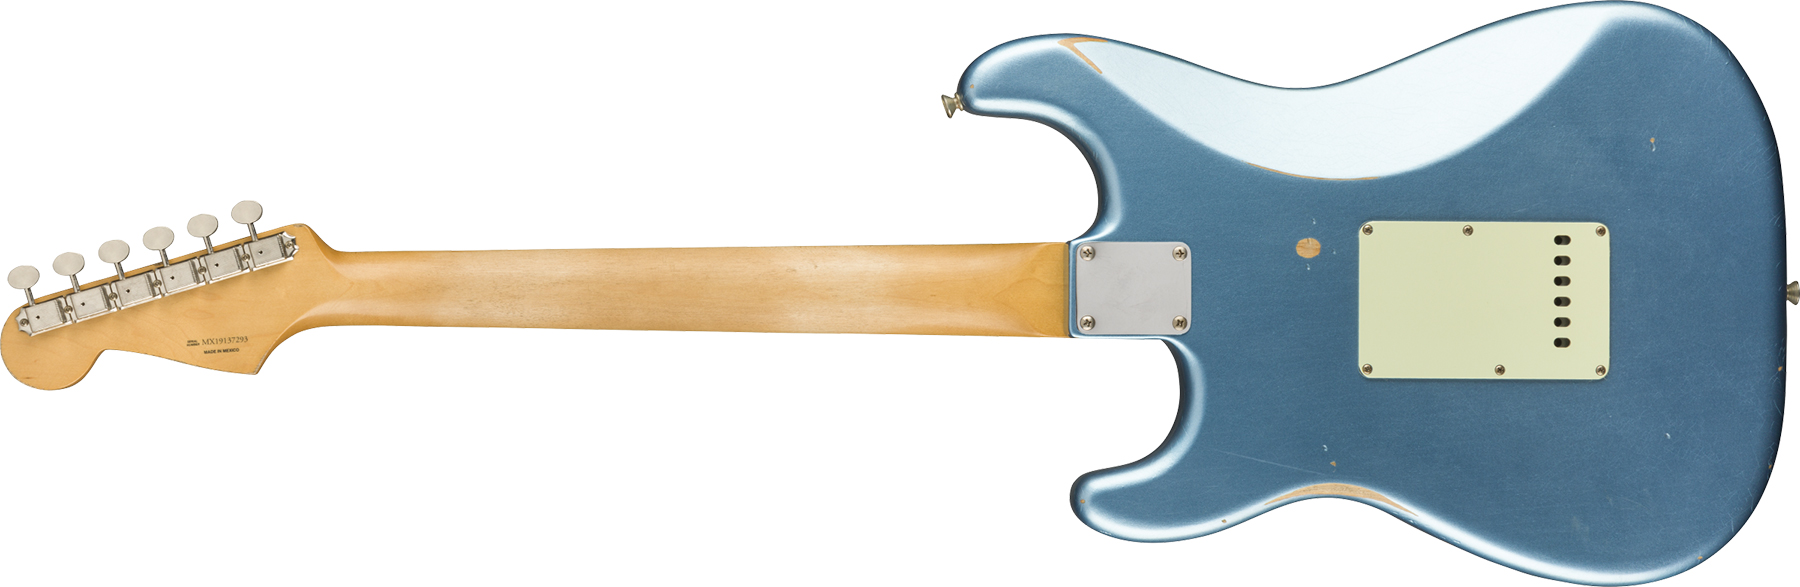 Fender Strat 60s Road Worn Mex Pf - Lake Placid Blue - Guitare Électrique Forme Str - Variation 1